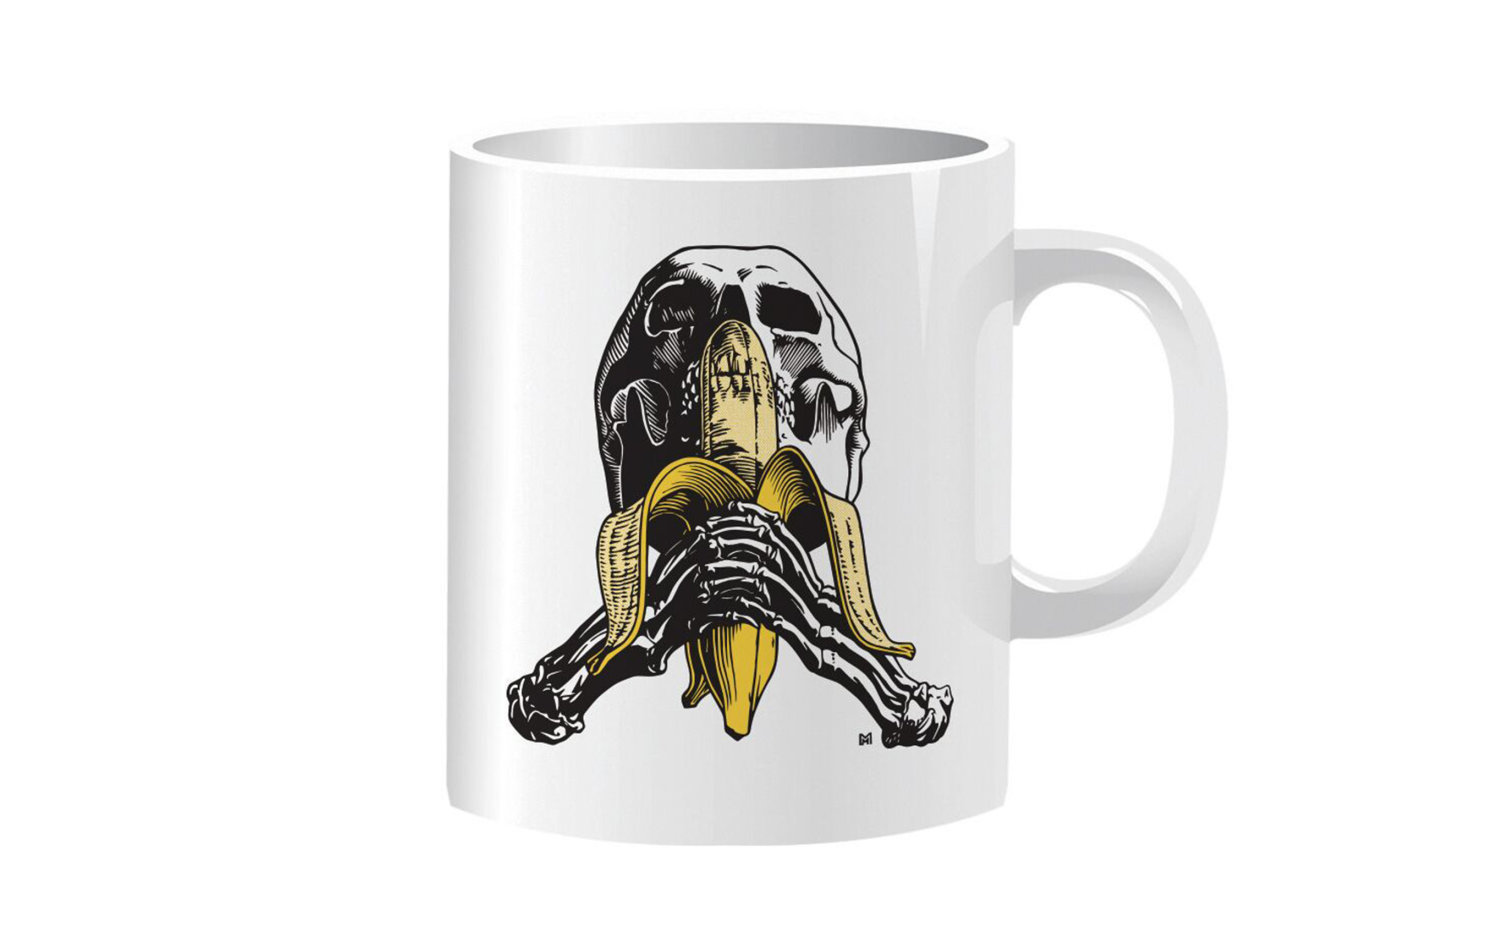 Blind Heritage Skull & Banana Mug (50872001)